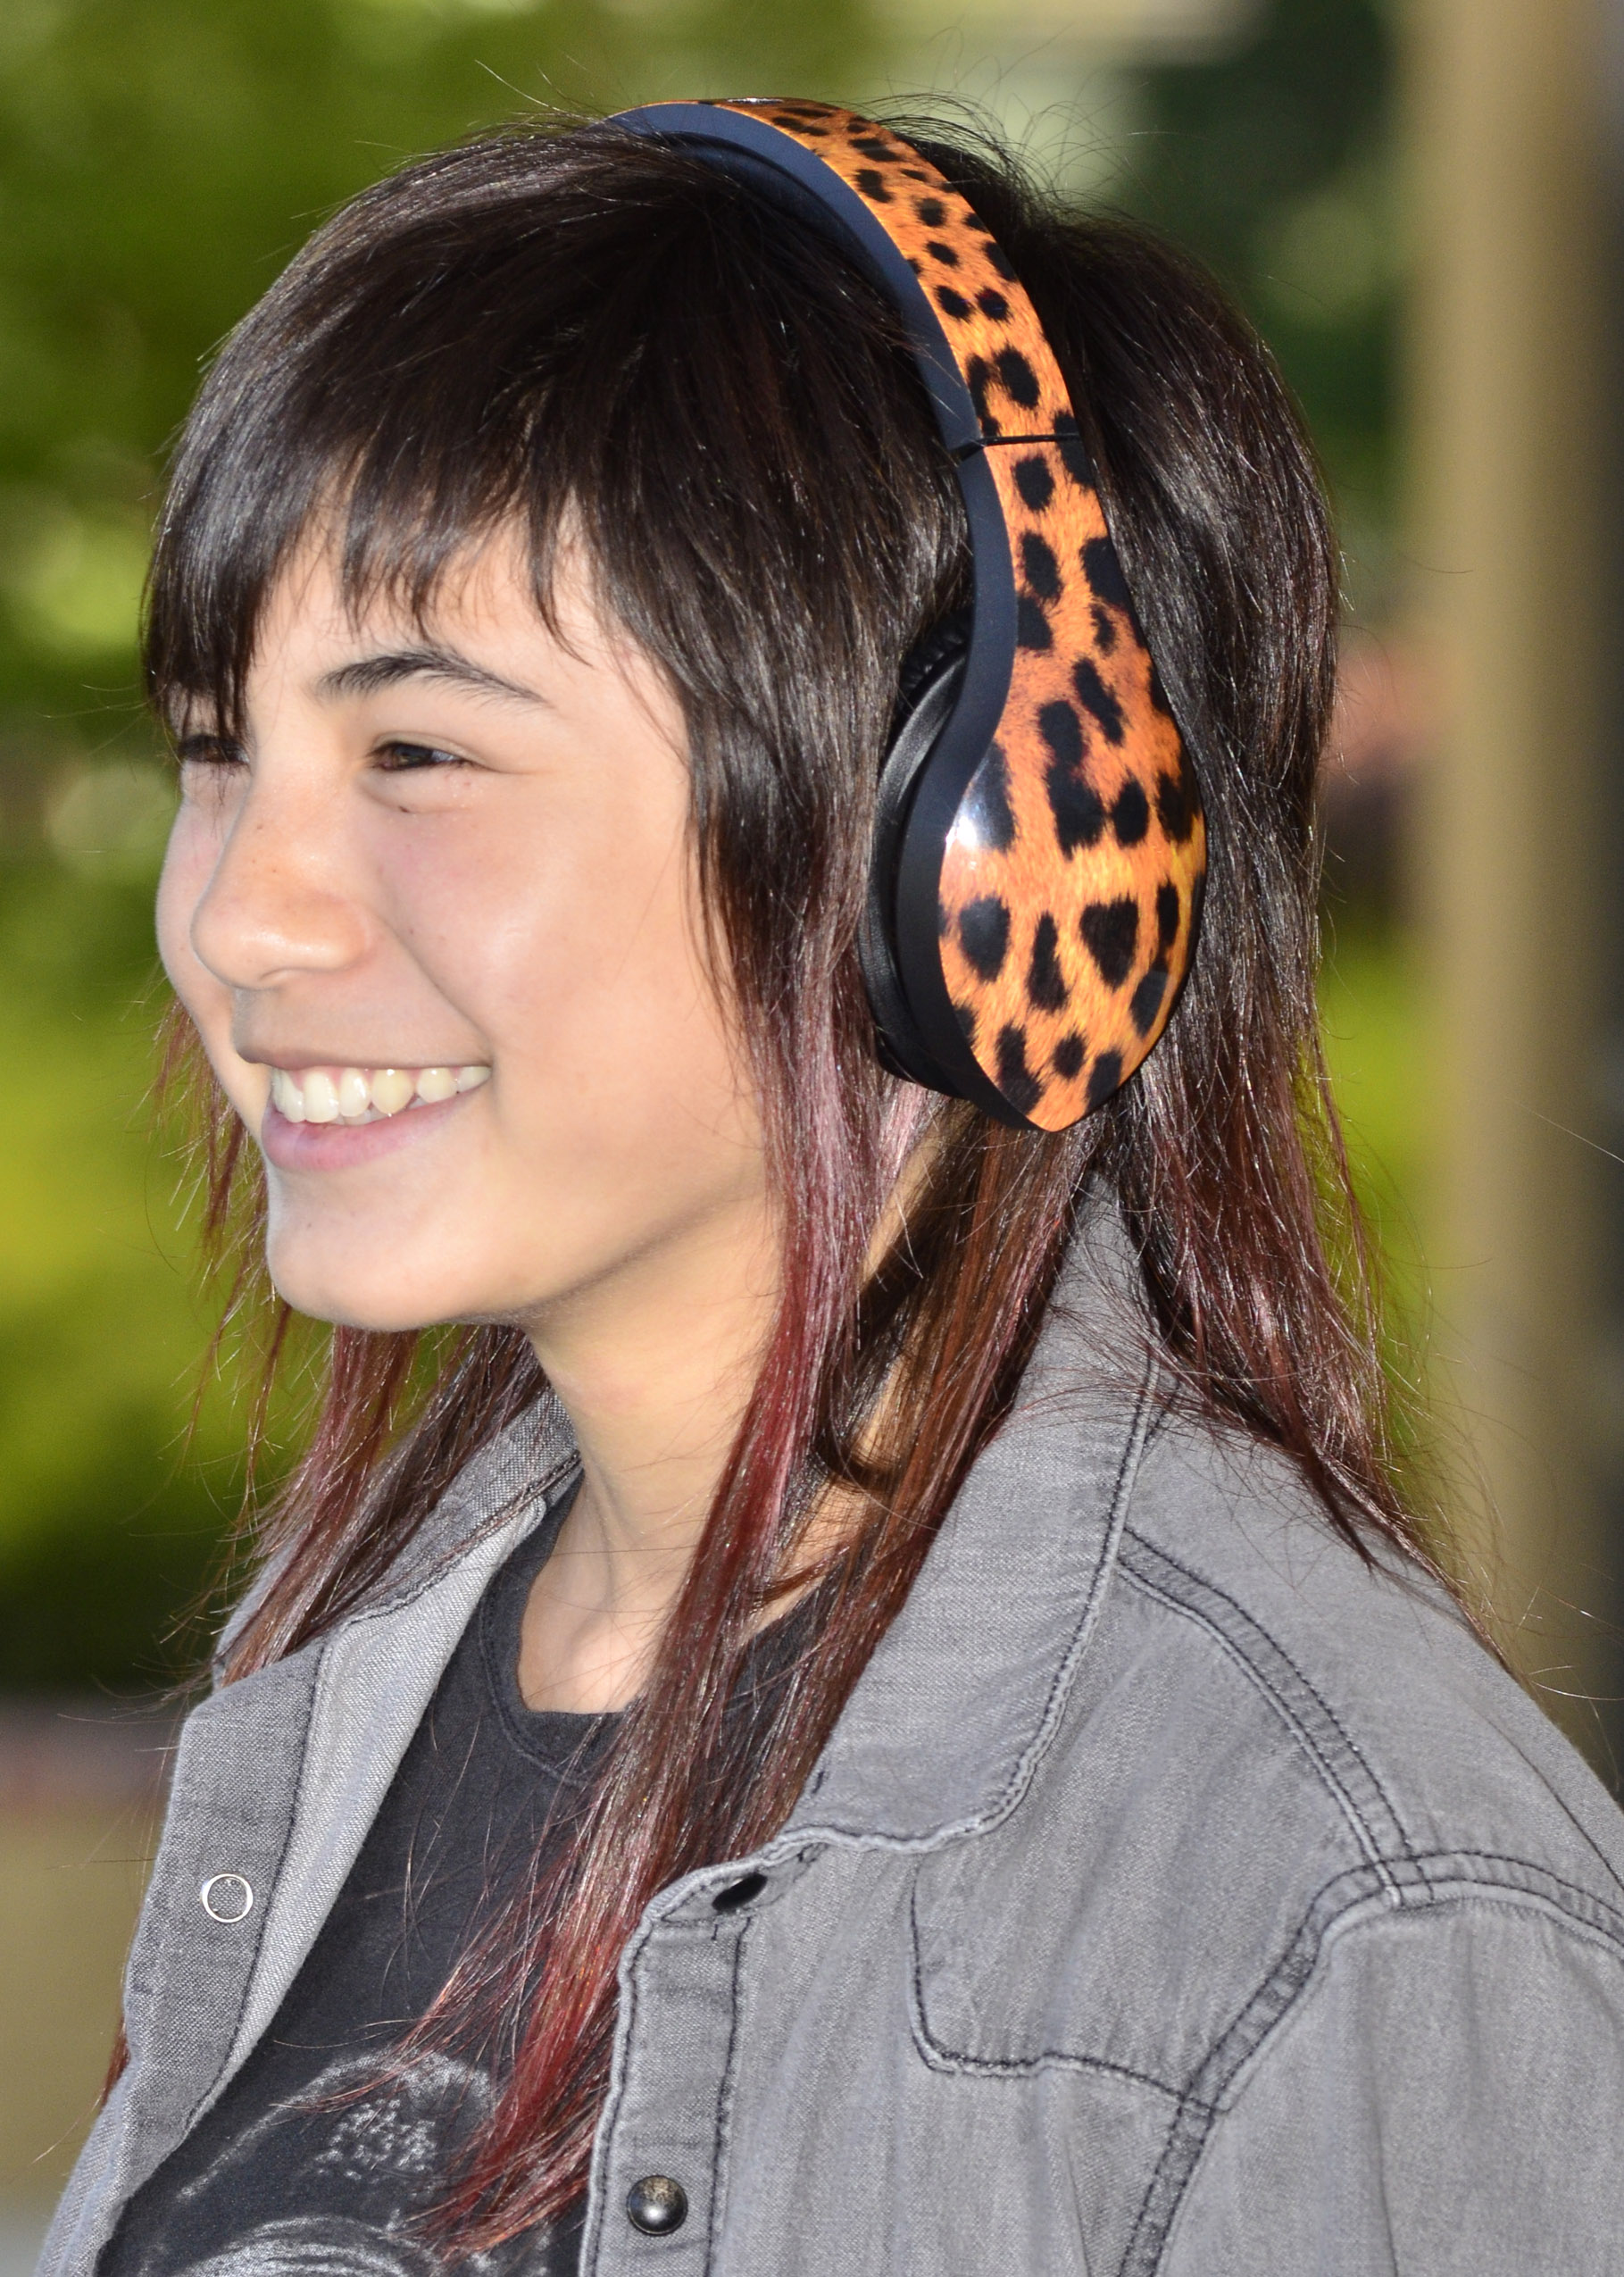 Velodyne's wireless vFree headphones in designer skin leopard